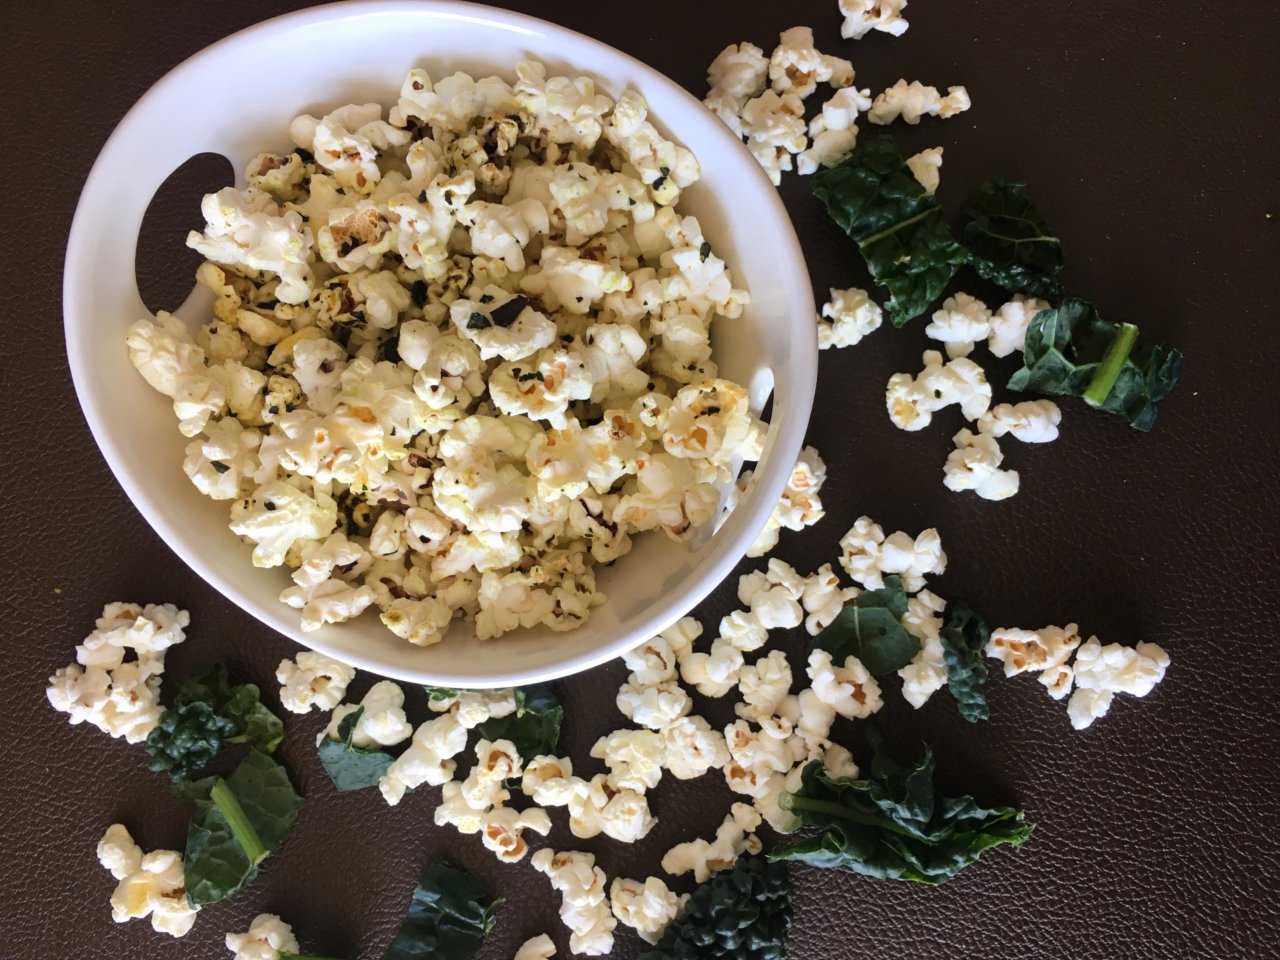 Kale-Cheezy-Popcorn-2-1280x960.jpg